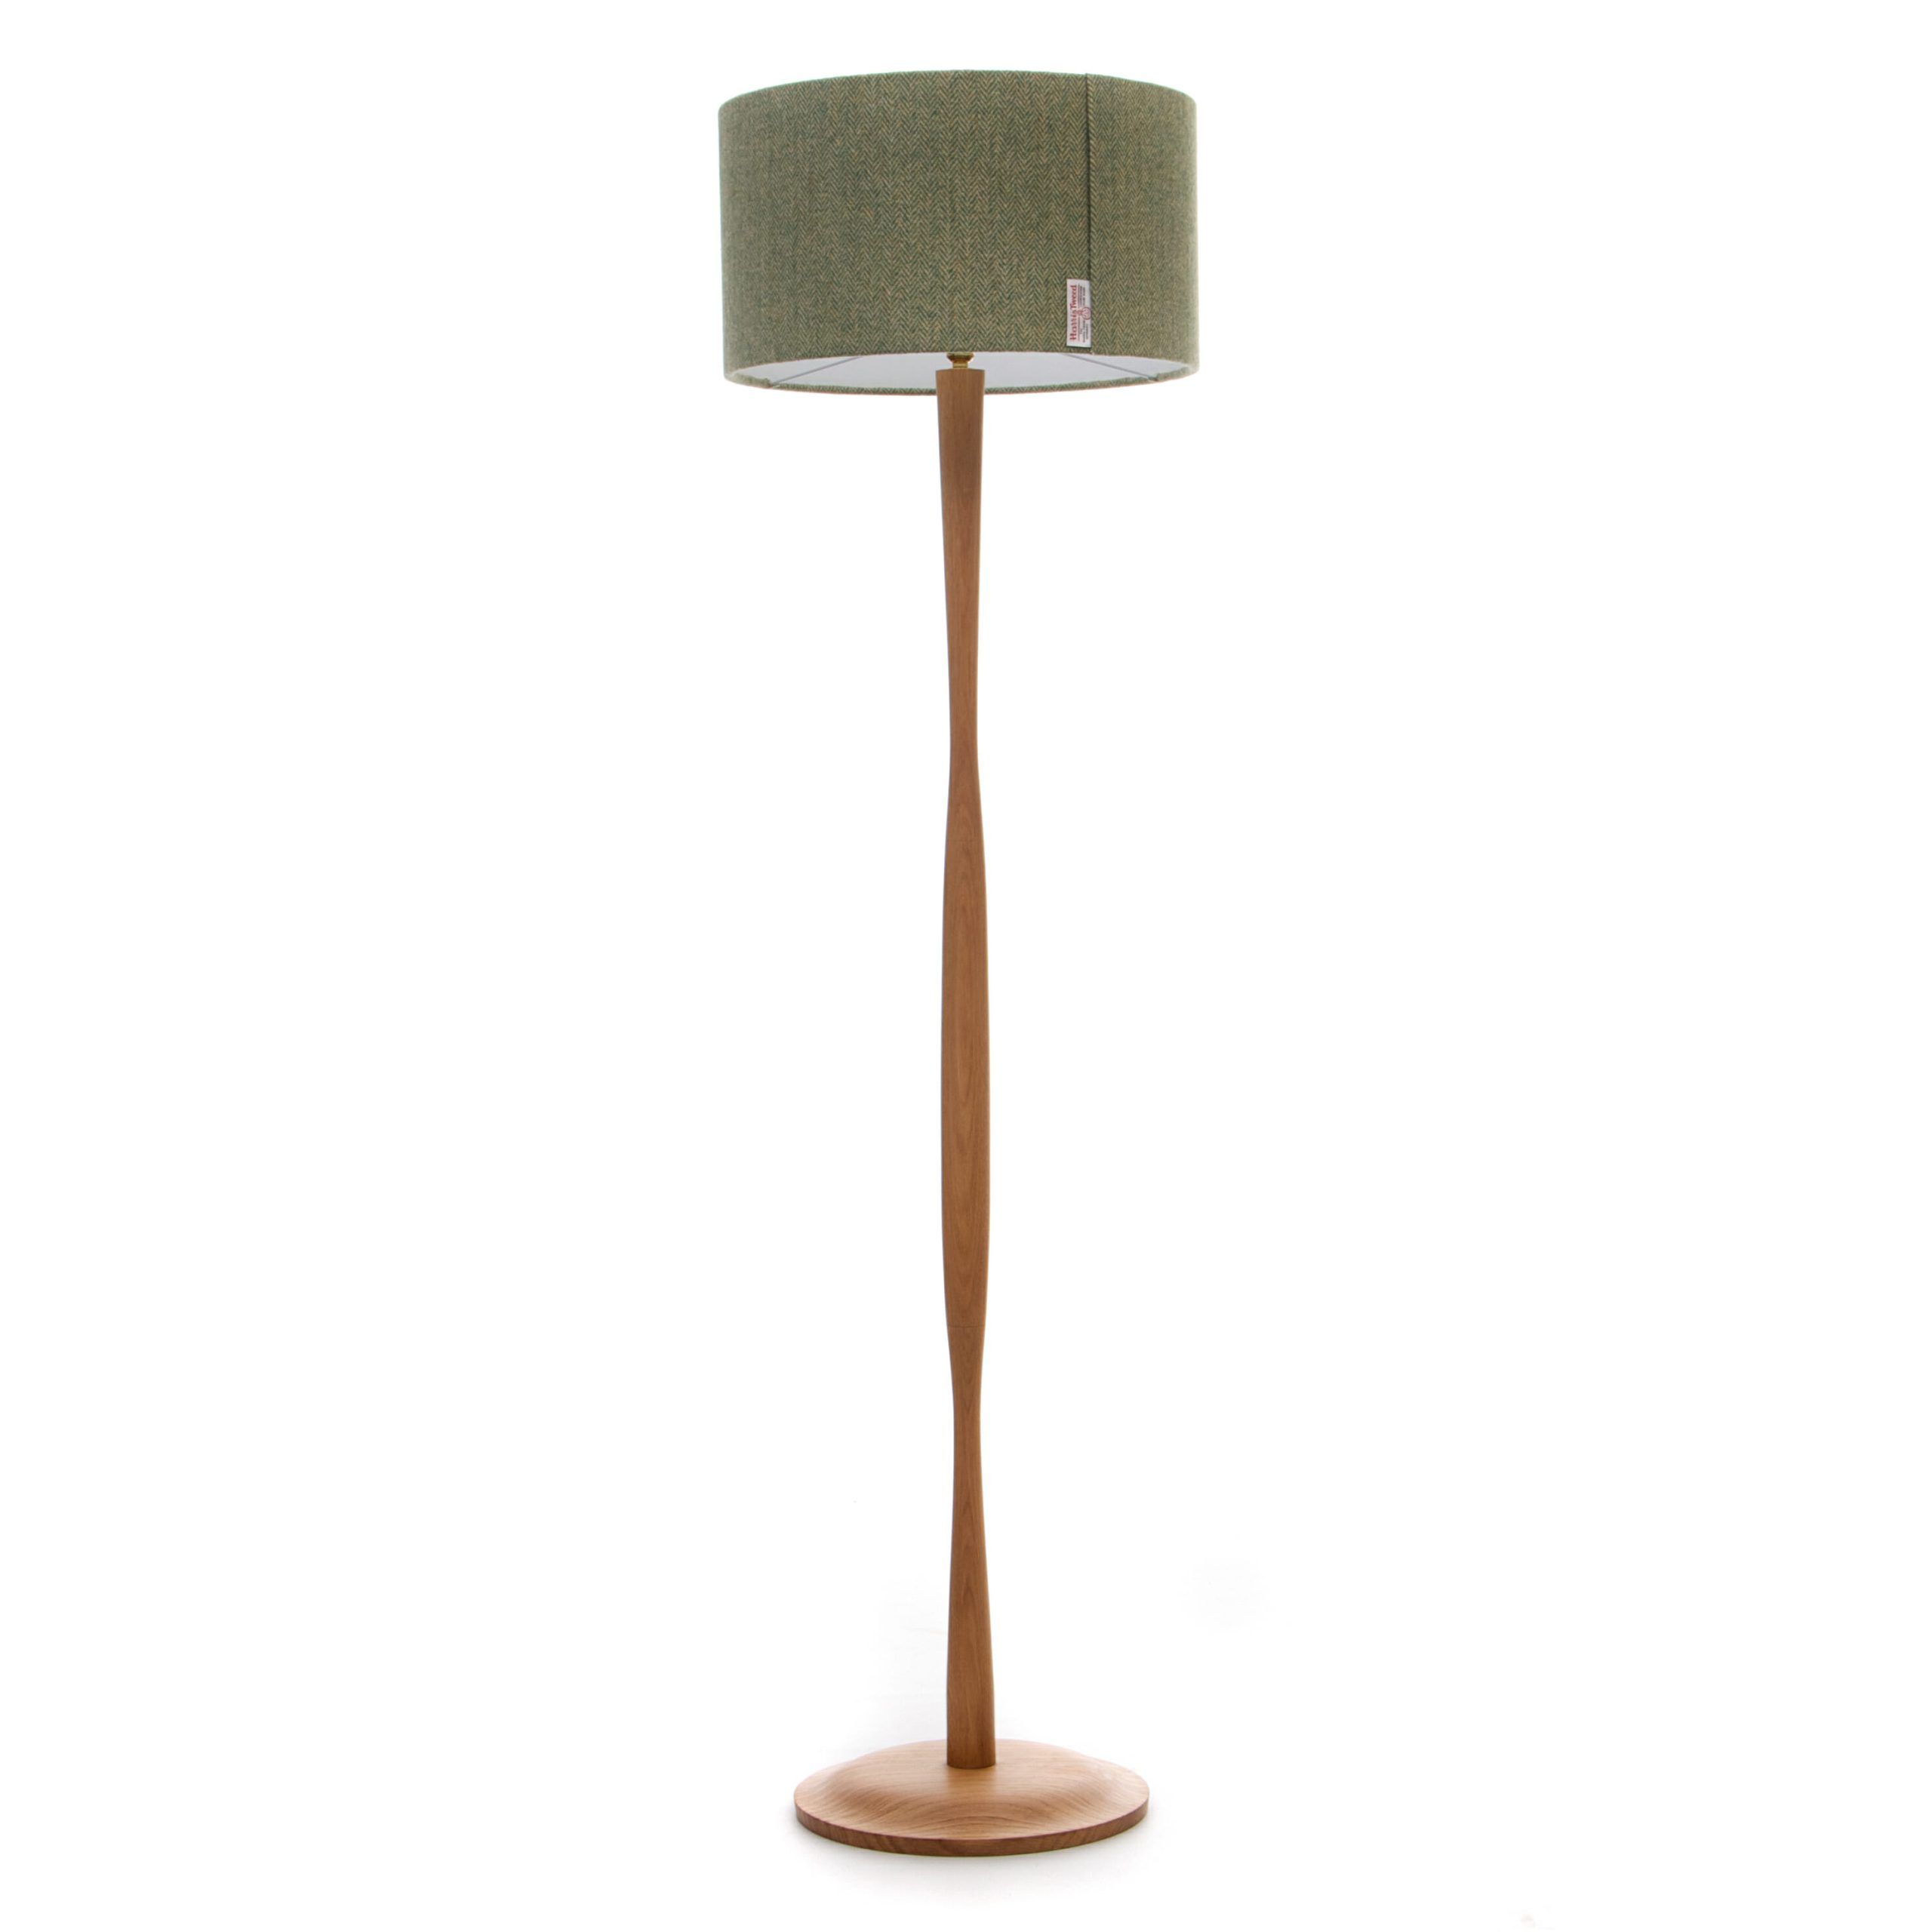 Modern Oak Floor Lamp | Wooden Floor Lamp Handmade In The Uk Intended For Oak Floor Lamps (View 4 of 15)